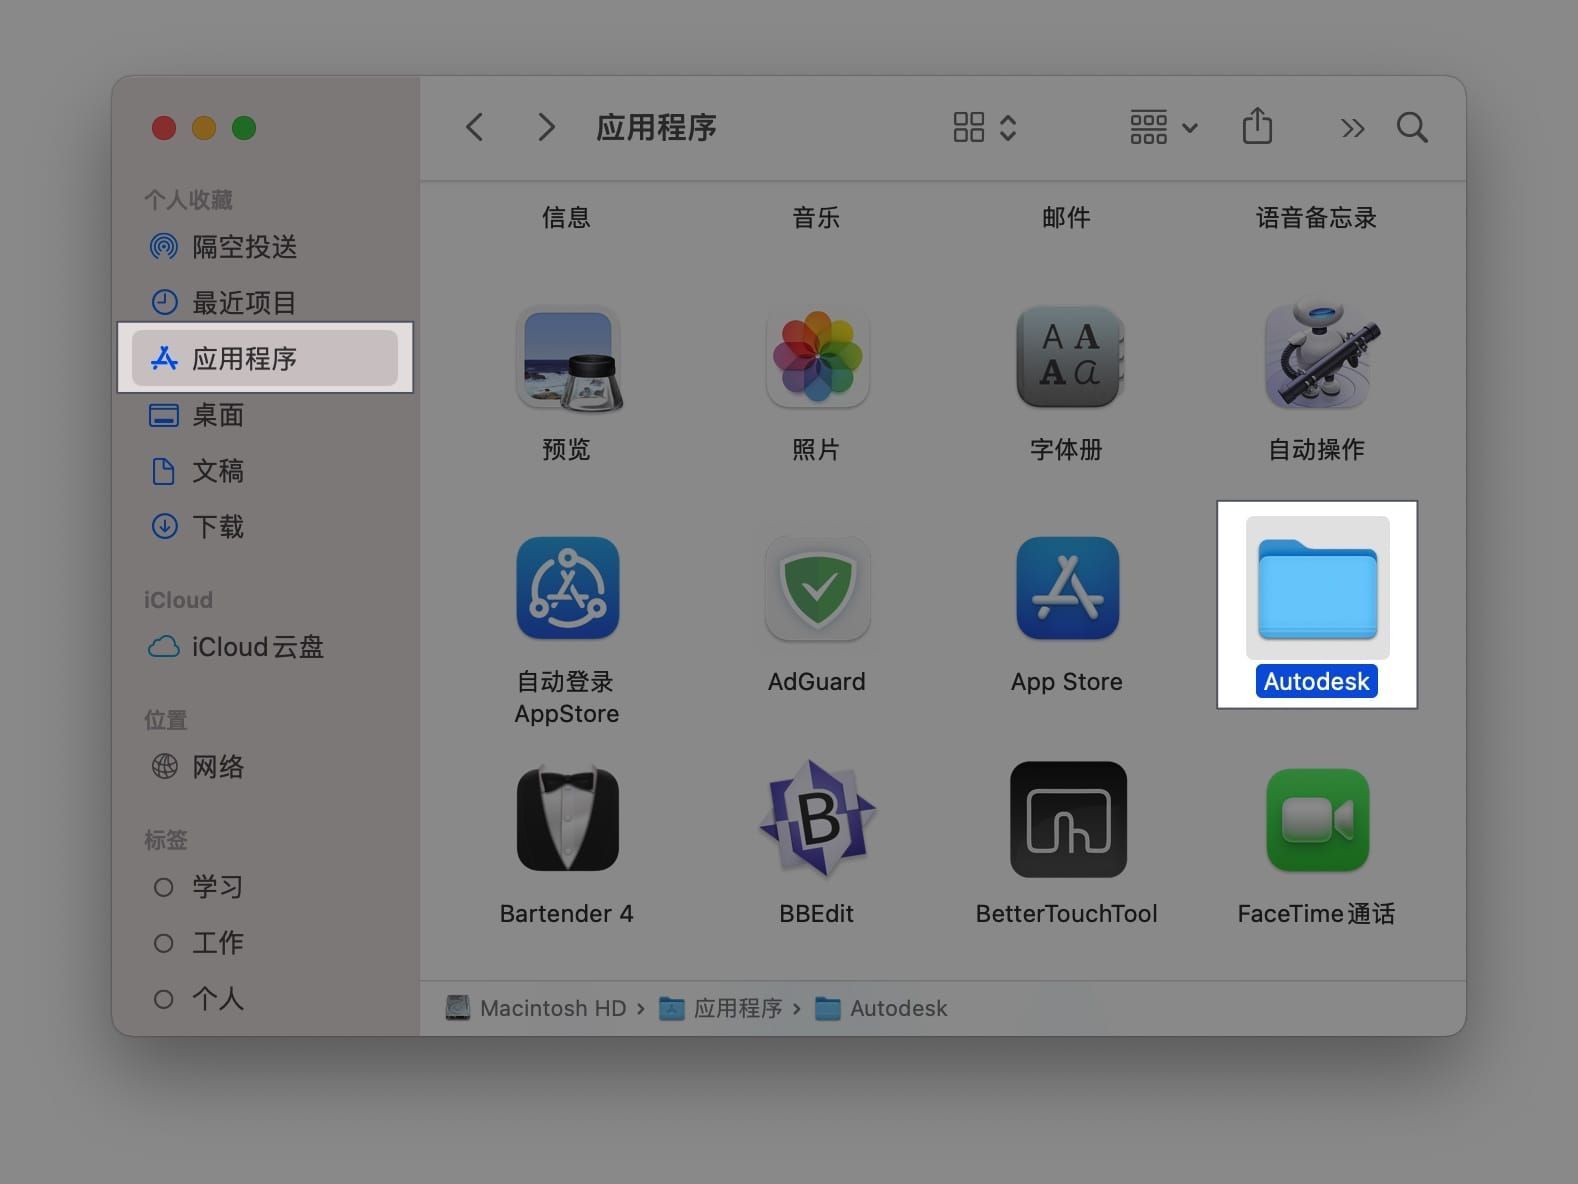 AutoCAD 2021.1 for Mac 中文版破解教程（支持Big Sur）